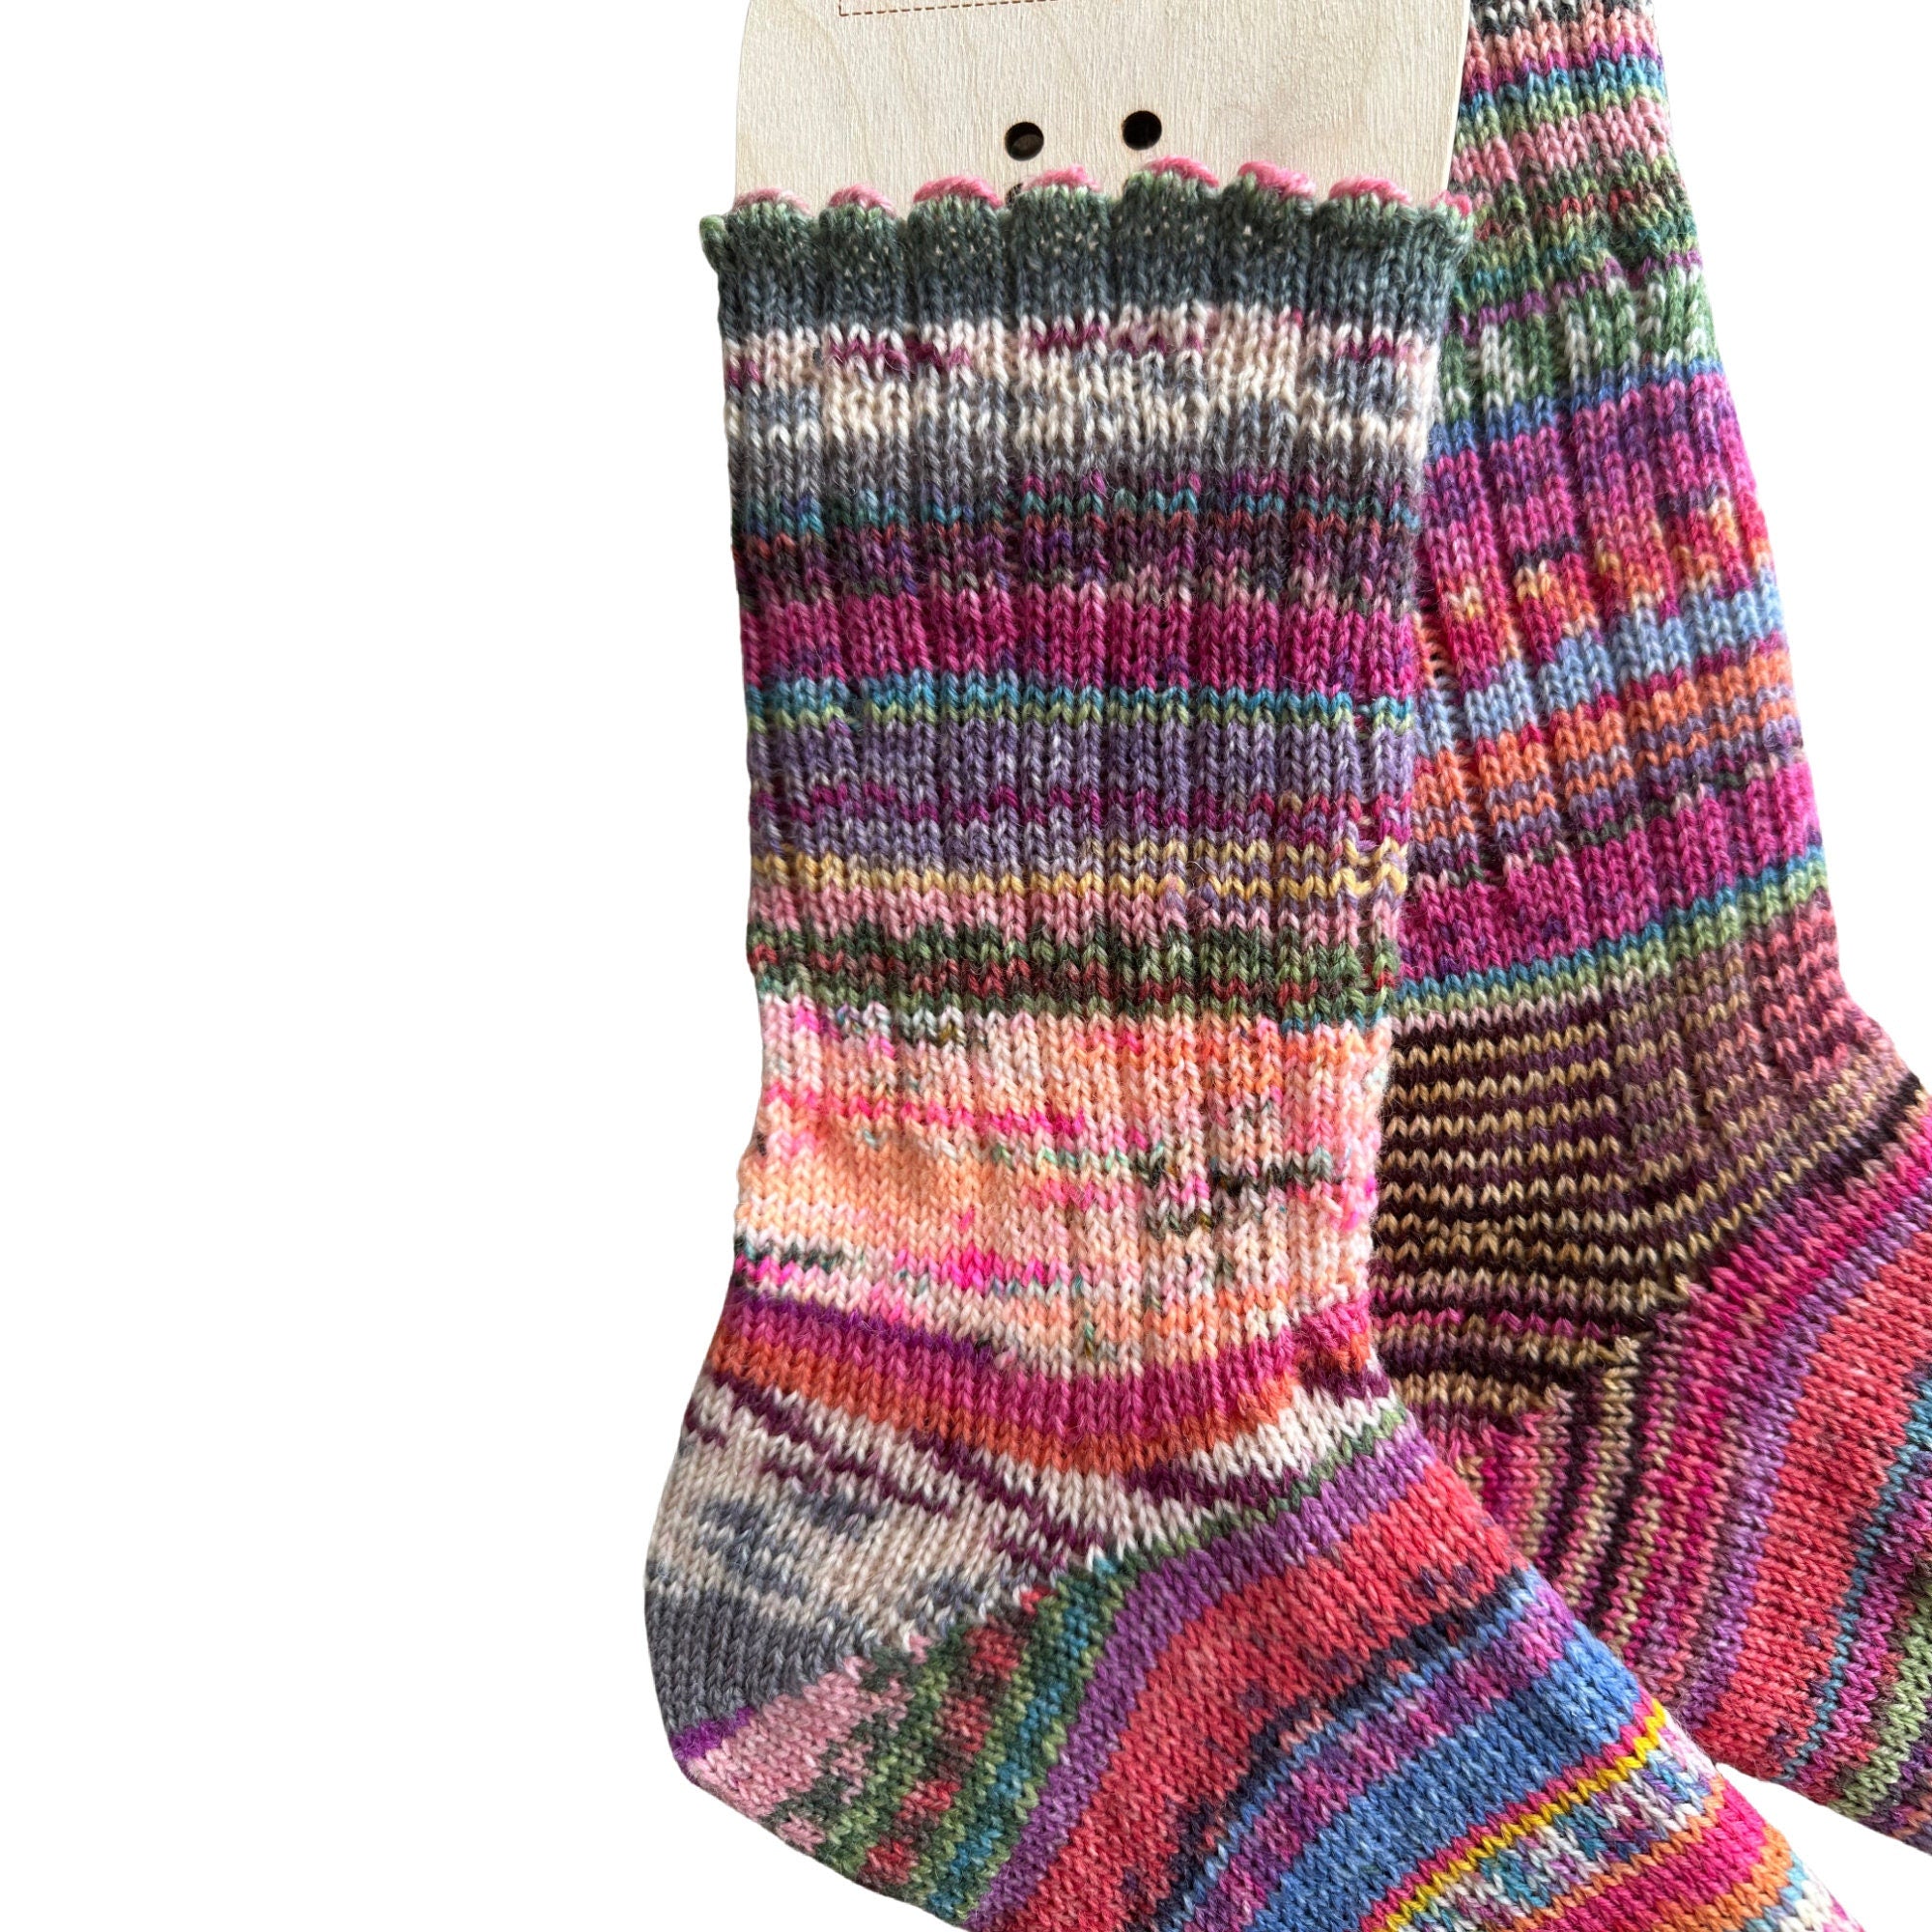 Colorful Scrappy Merino Wool Socks, HandMade Women's Wool Socks, Unique Colored Socks, Winter Wool Socks, Colorful Wool Socks, Unique